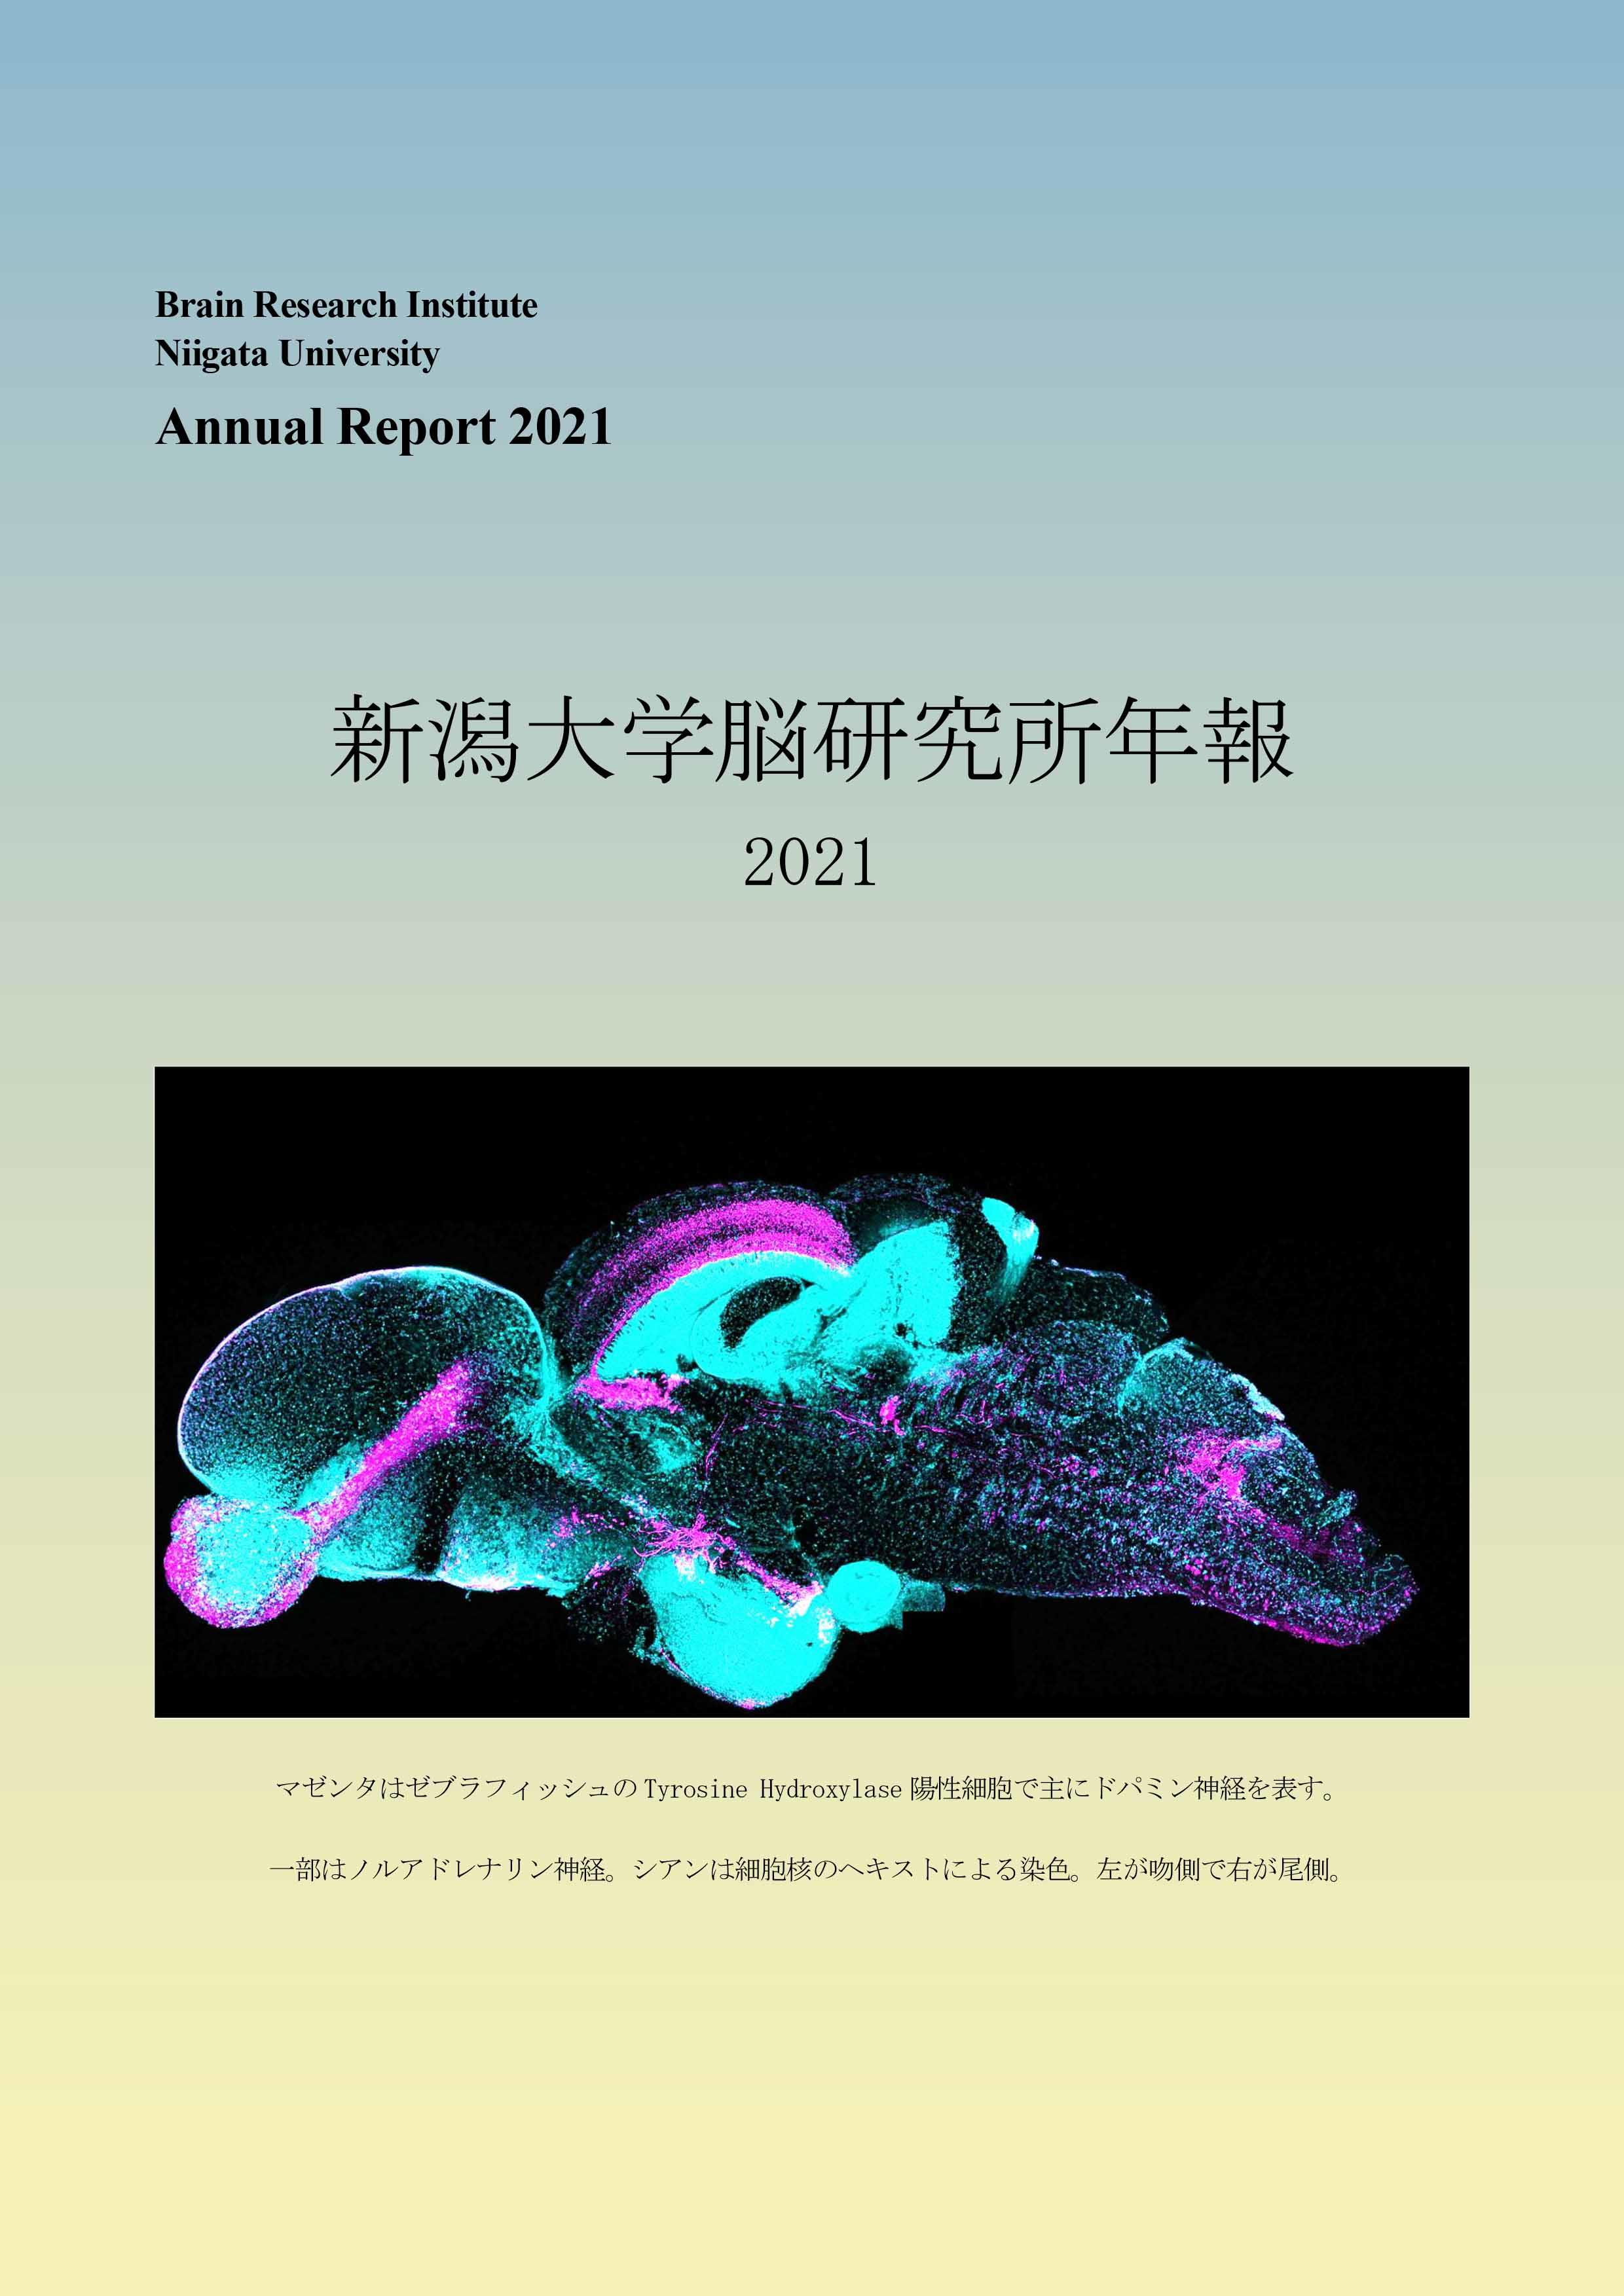 BRI Annual Report 2021 issued